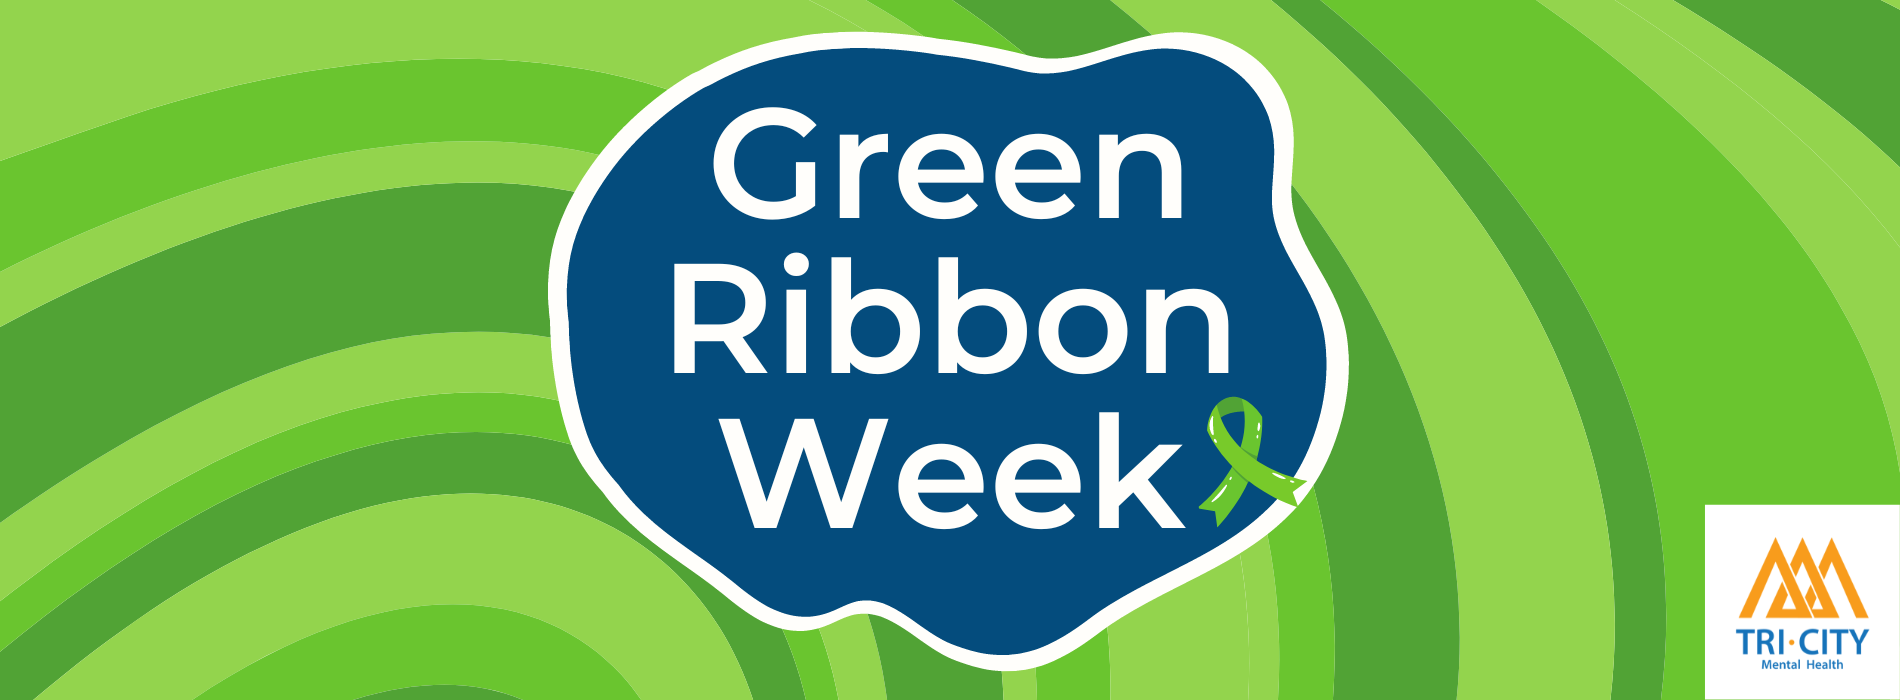 Green Ribbon Week 